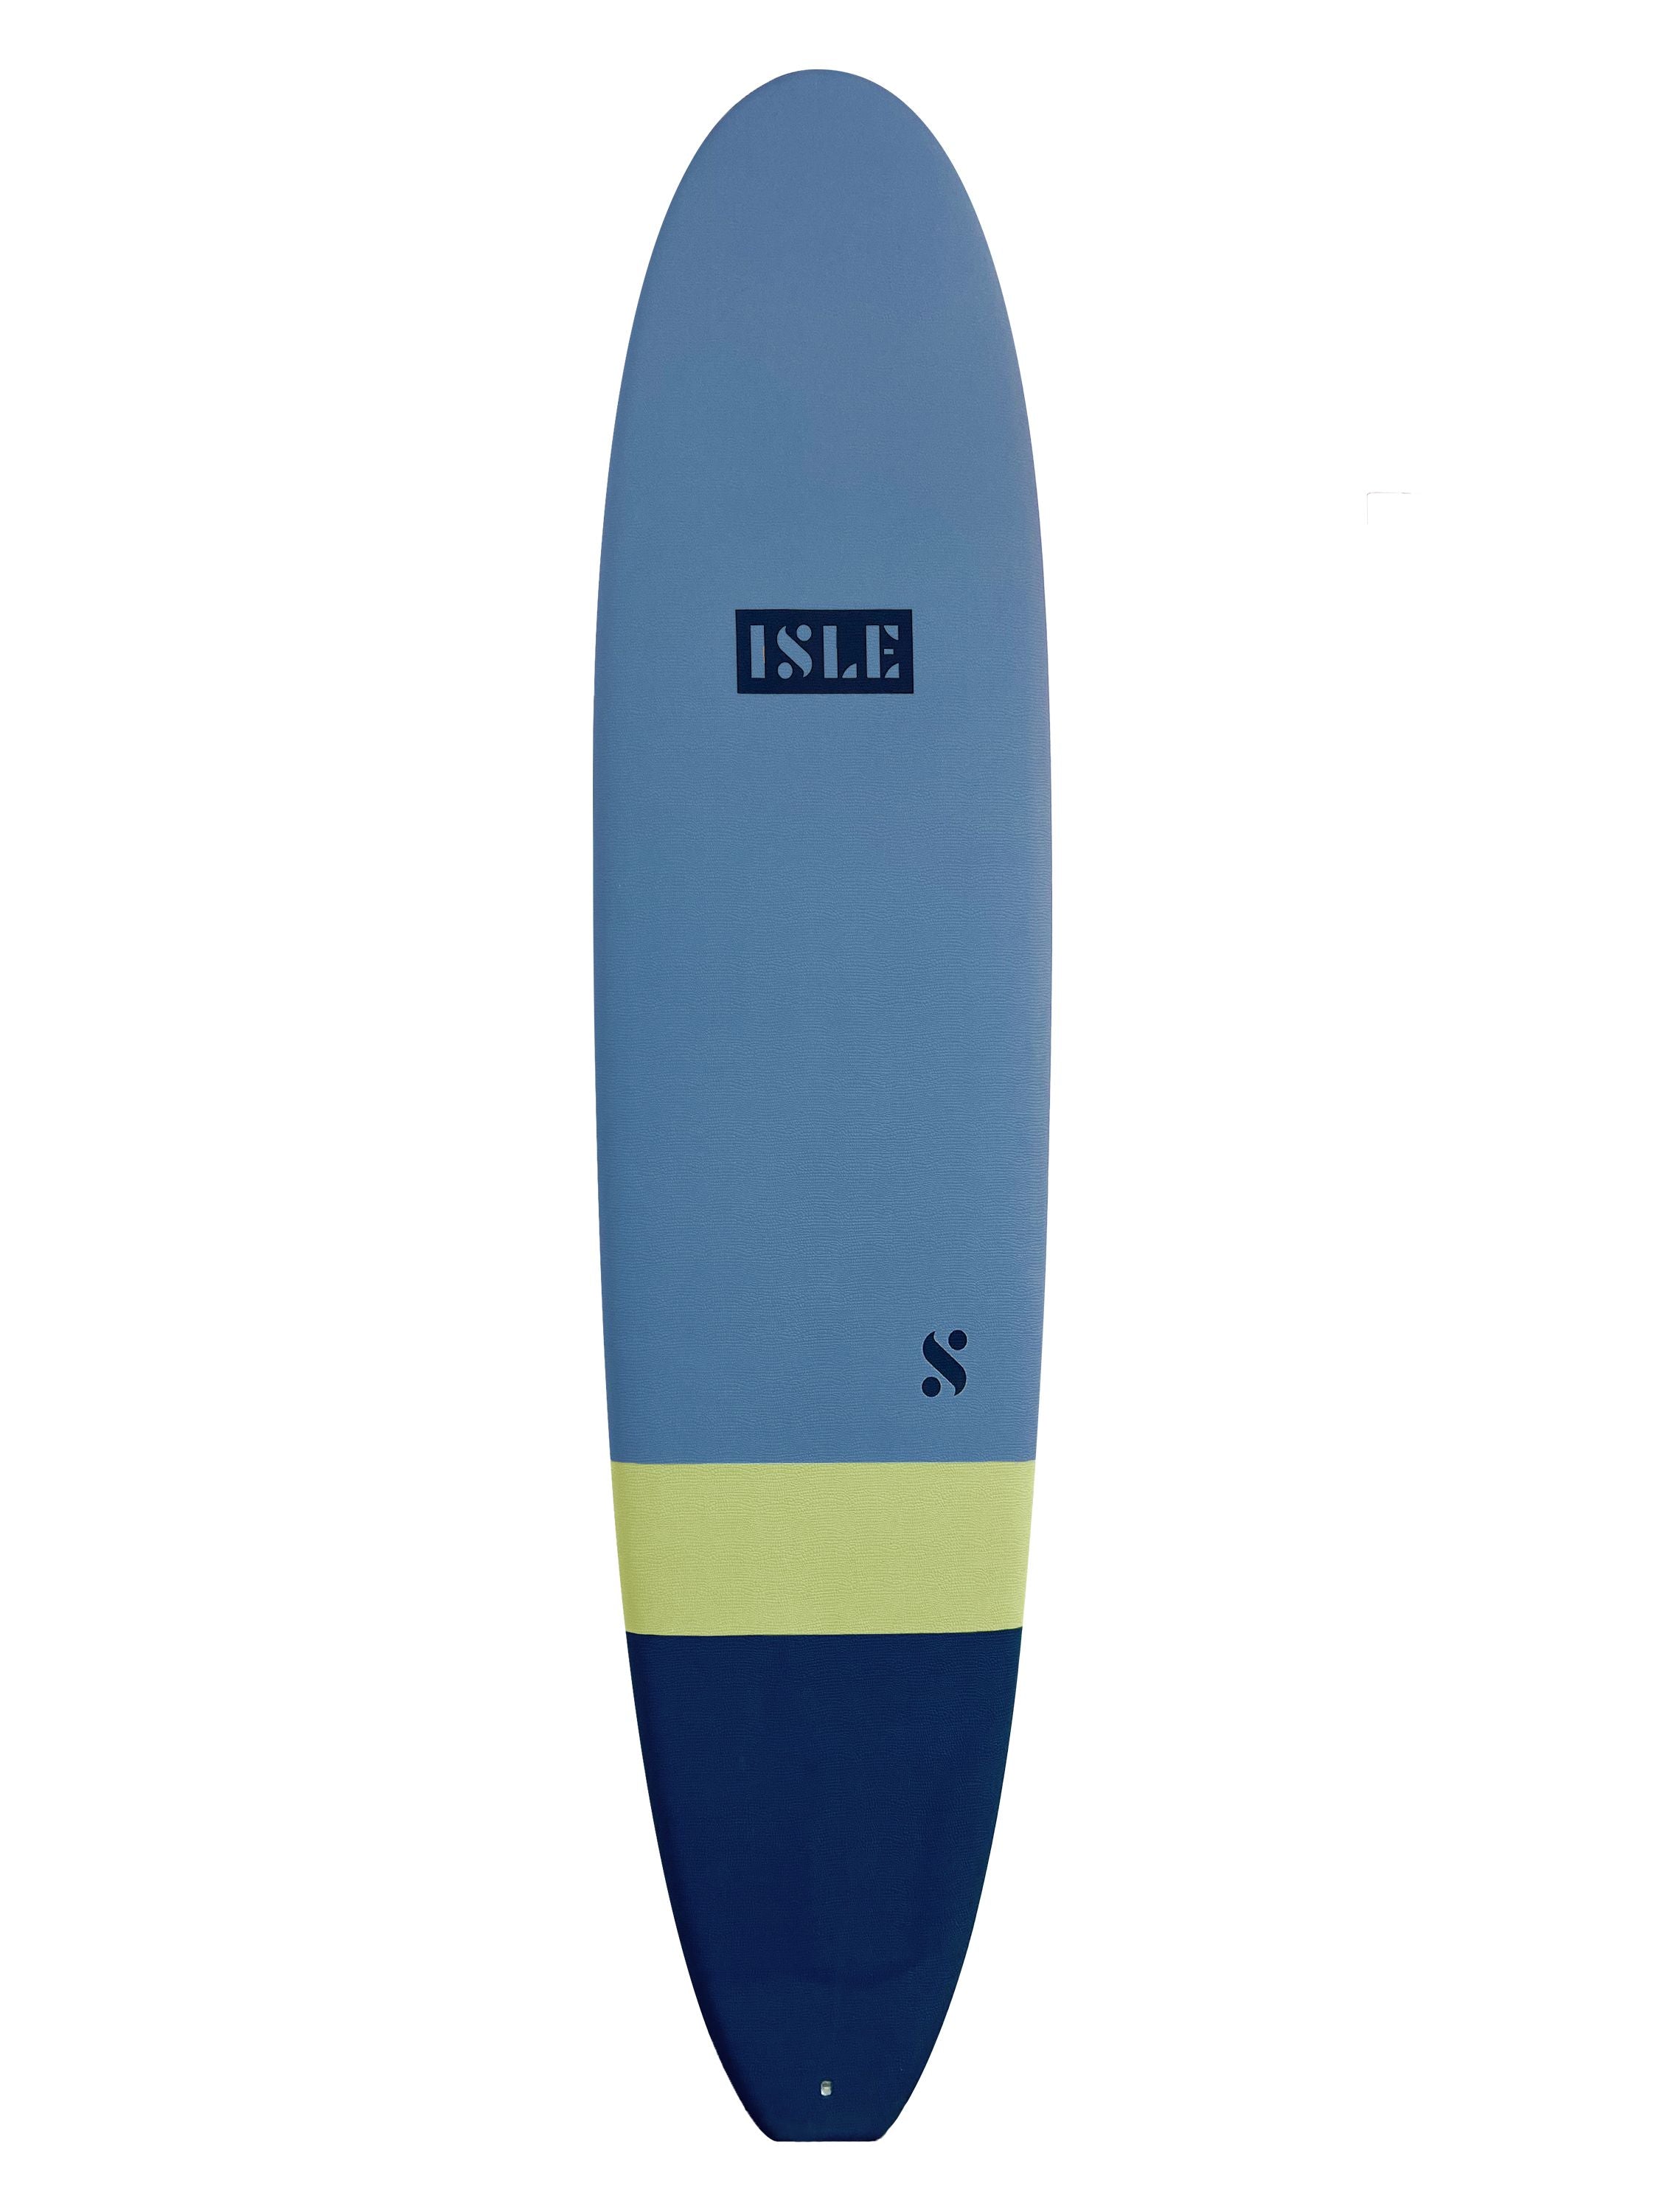 Coronado Soft Top Surfboard